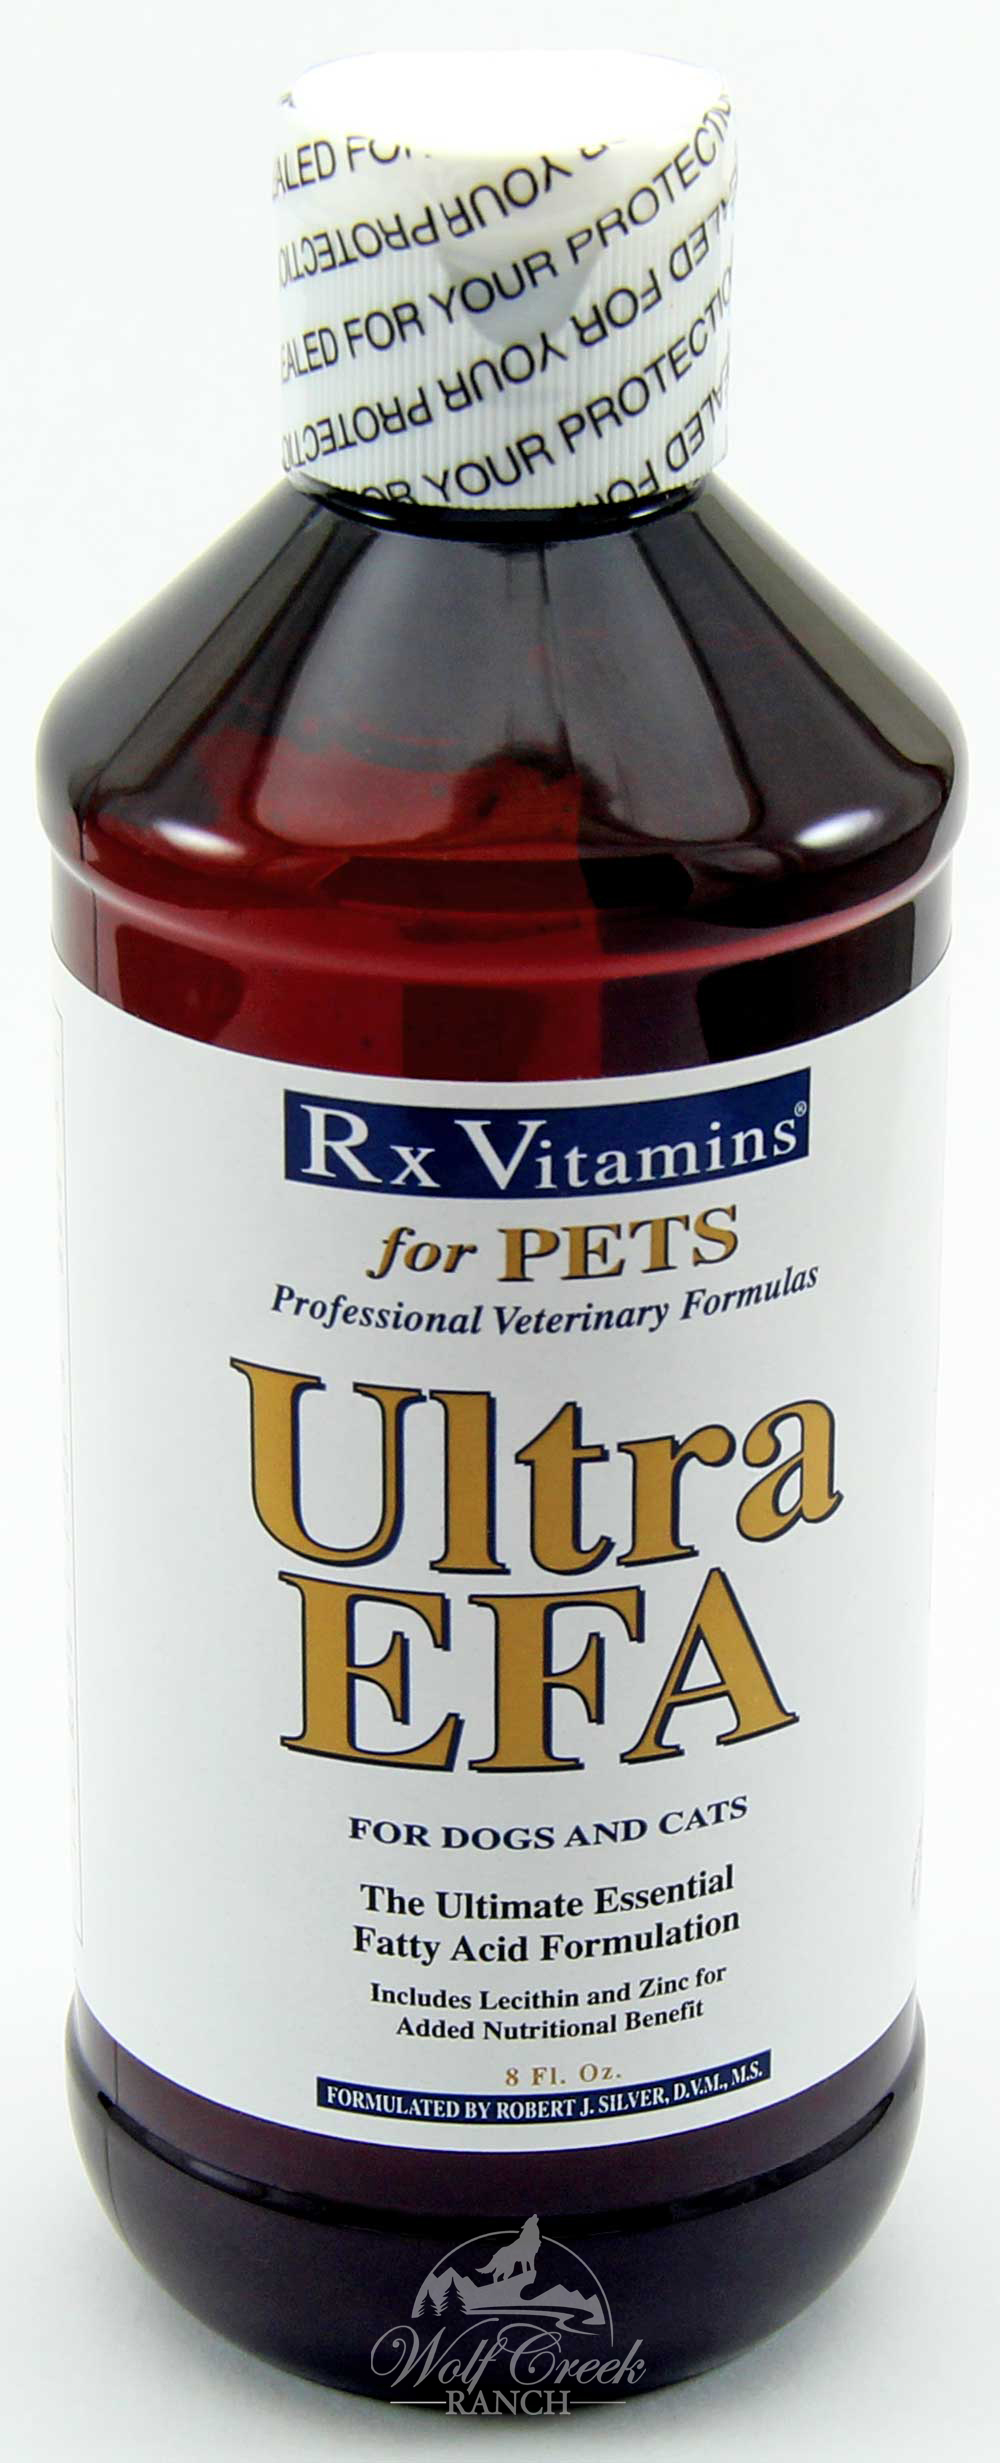 Rx Vitamins for Pets Professional Veterinary Formula RX Ultra EFA